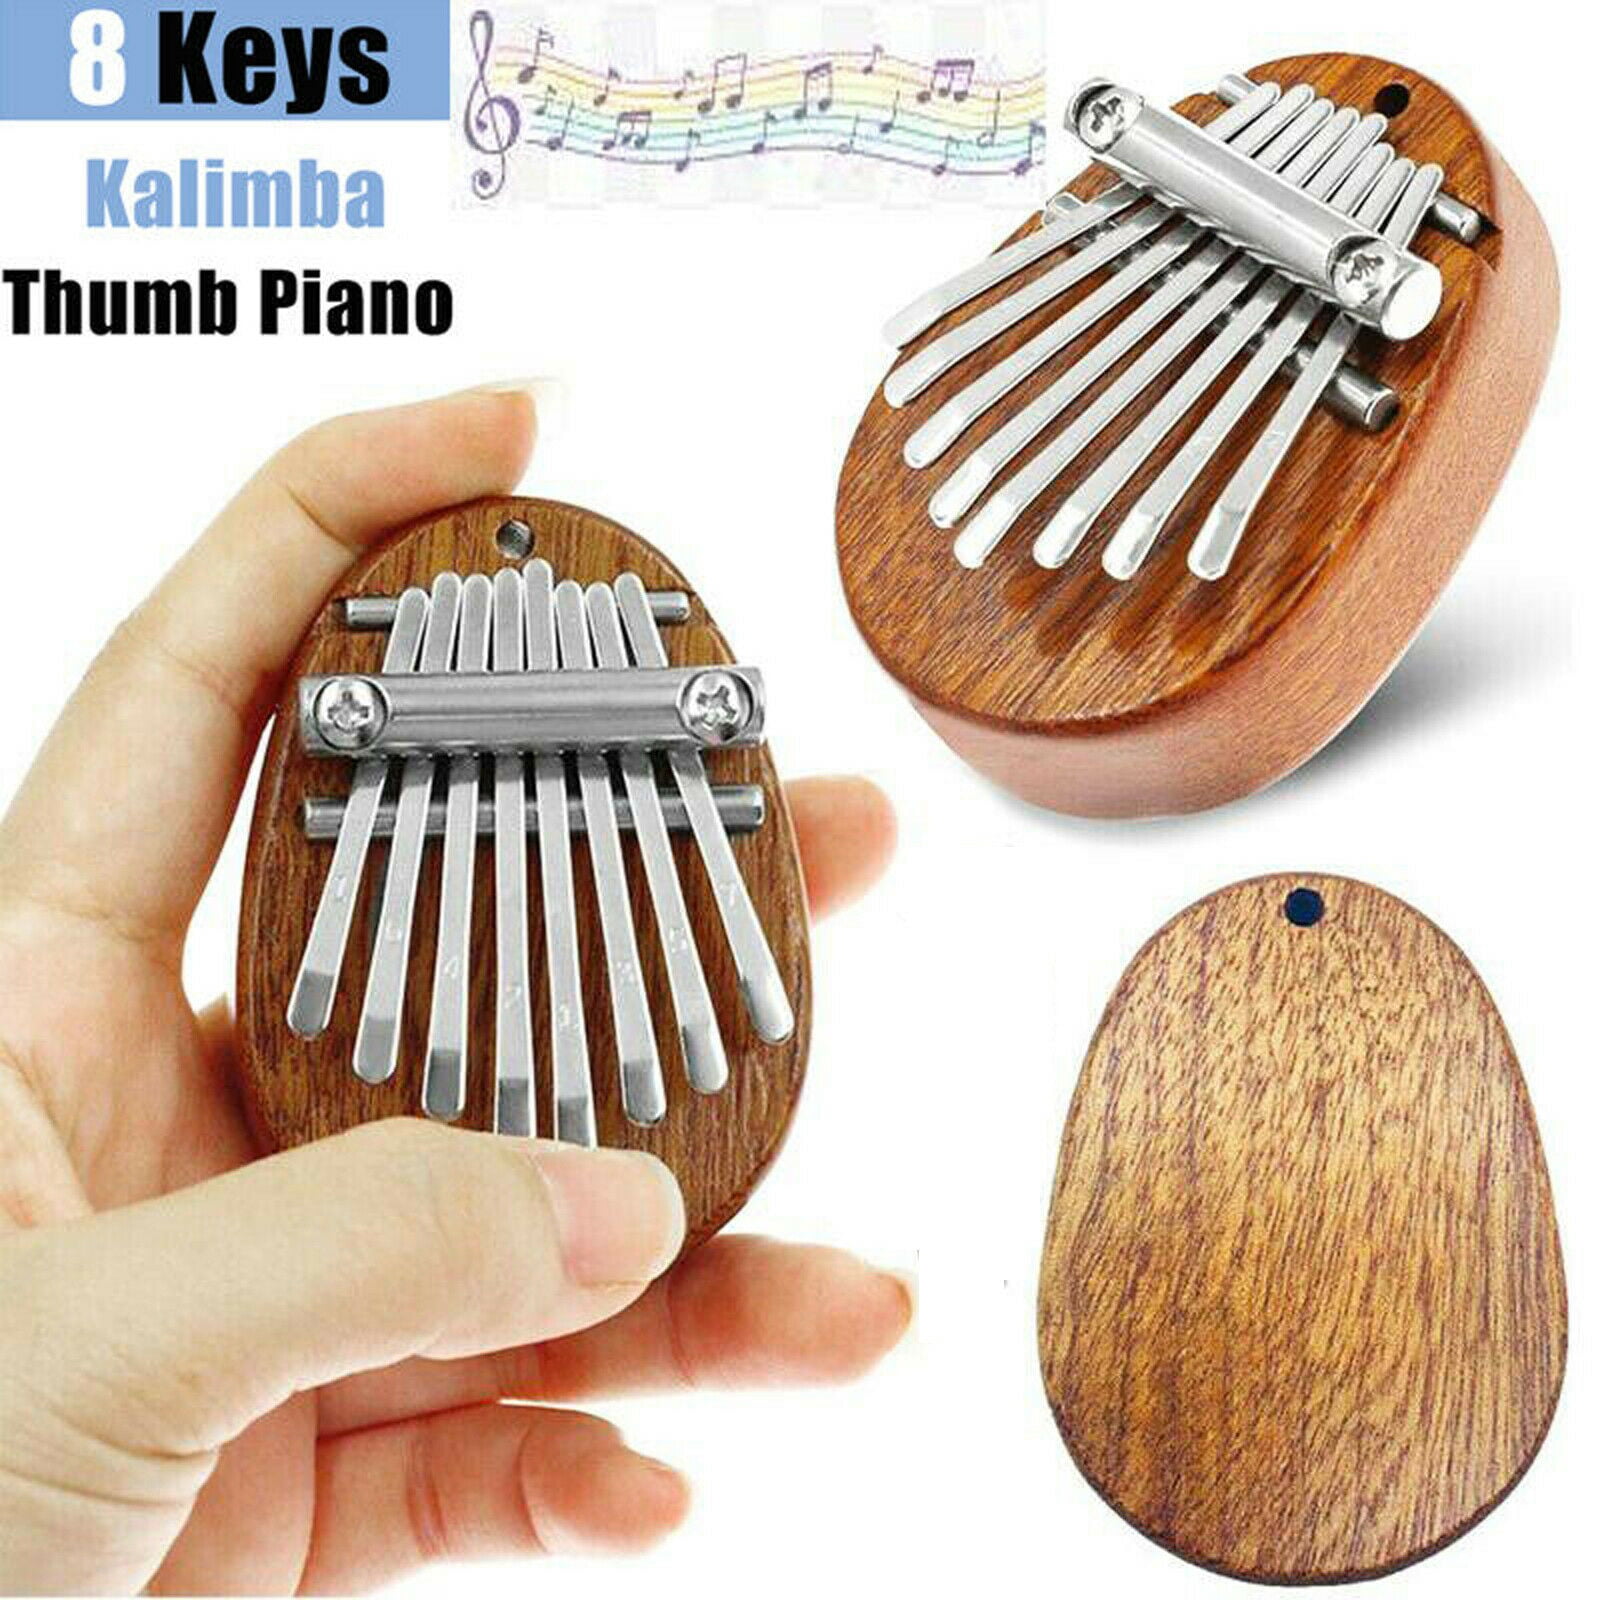 DSSPORT Mini kalimba 8 key thumb piano, african wood kalimba thumb piano  for Kids Adults,Finger Piano kalimba musical instruments for Msuic